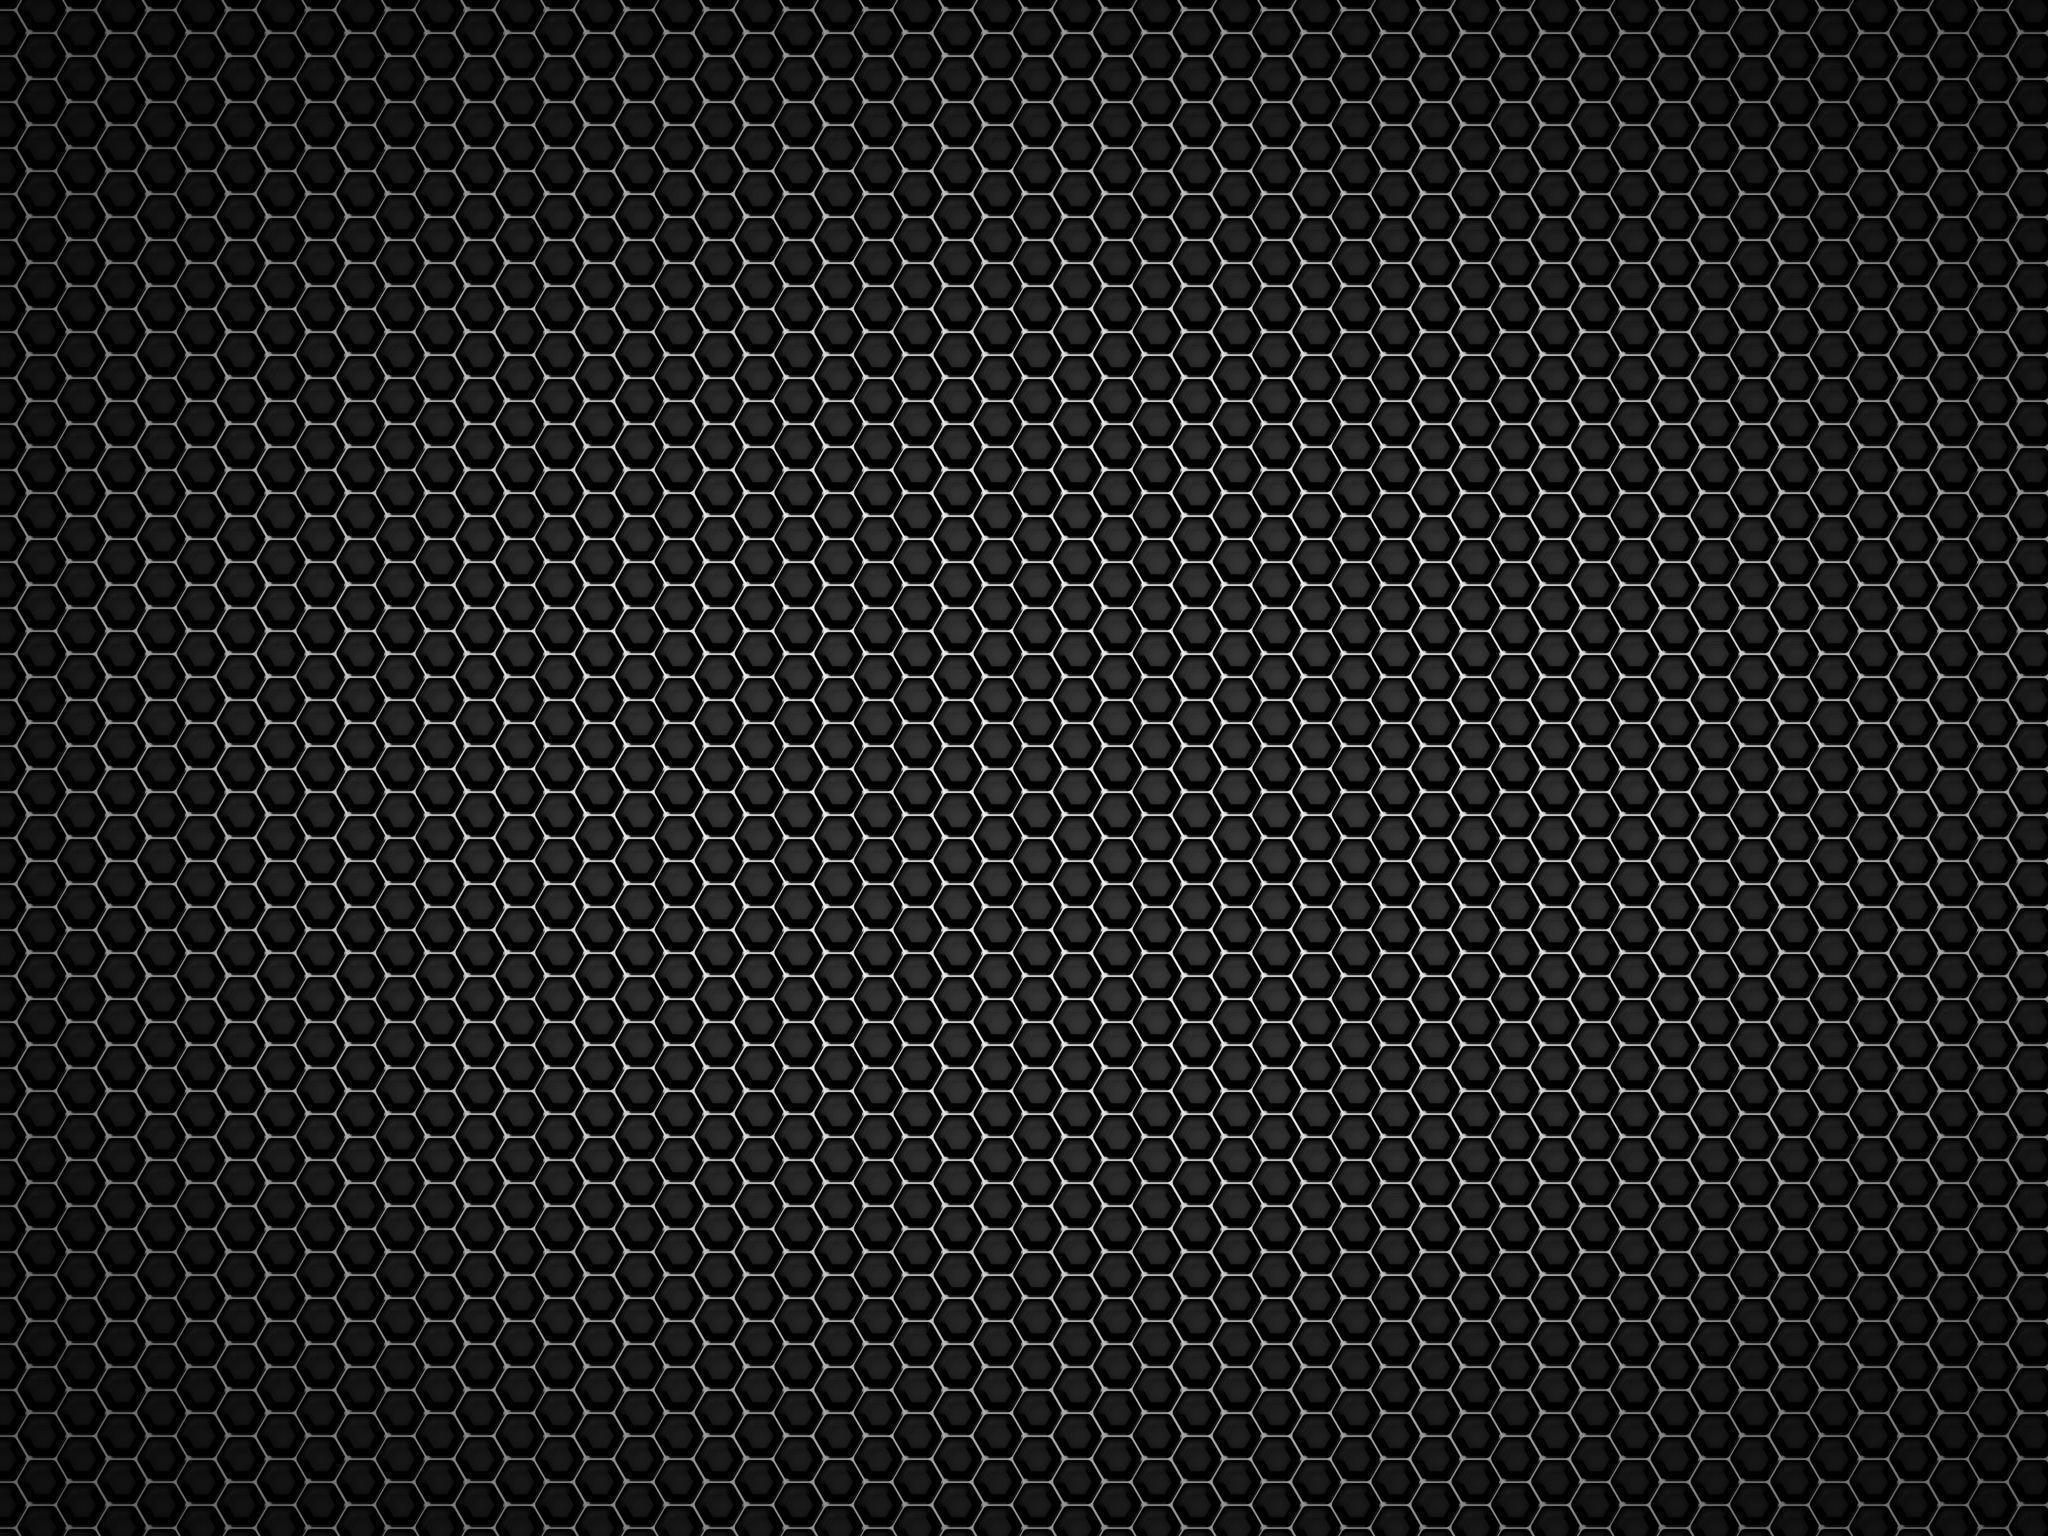 Green and Black Honeycomb Wallpaper Download  MobCup